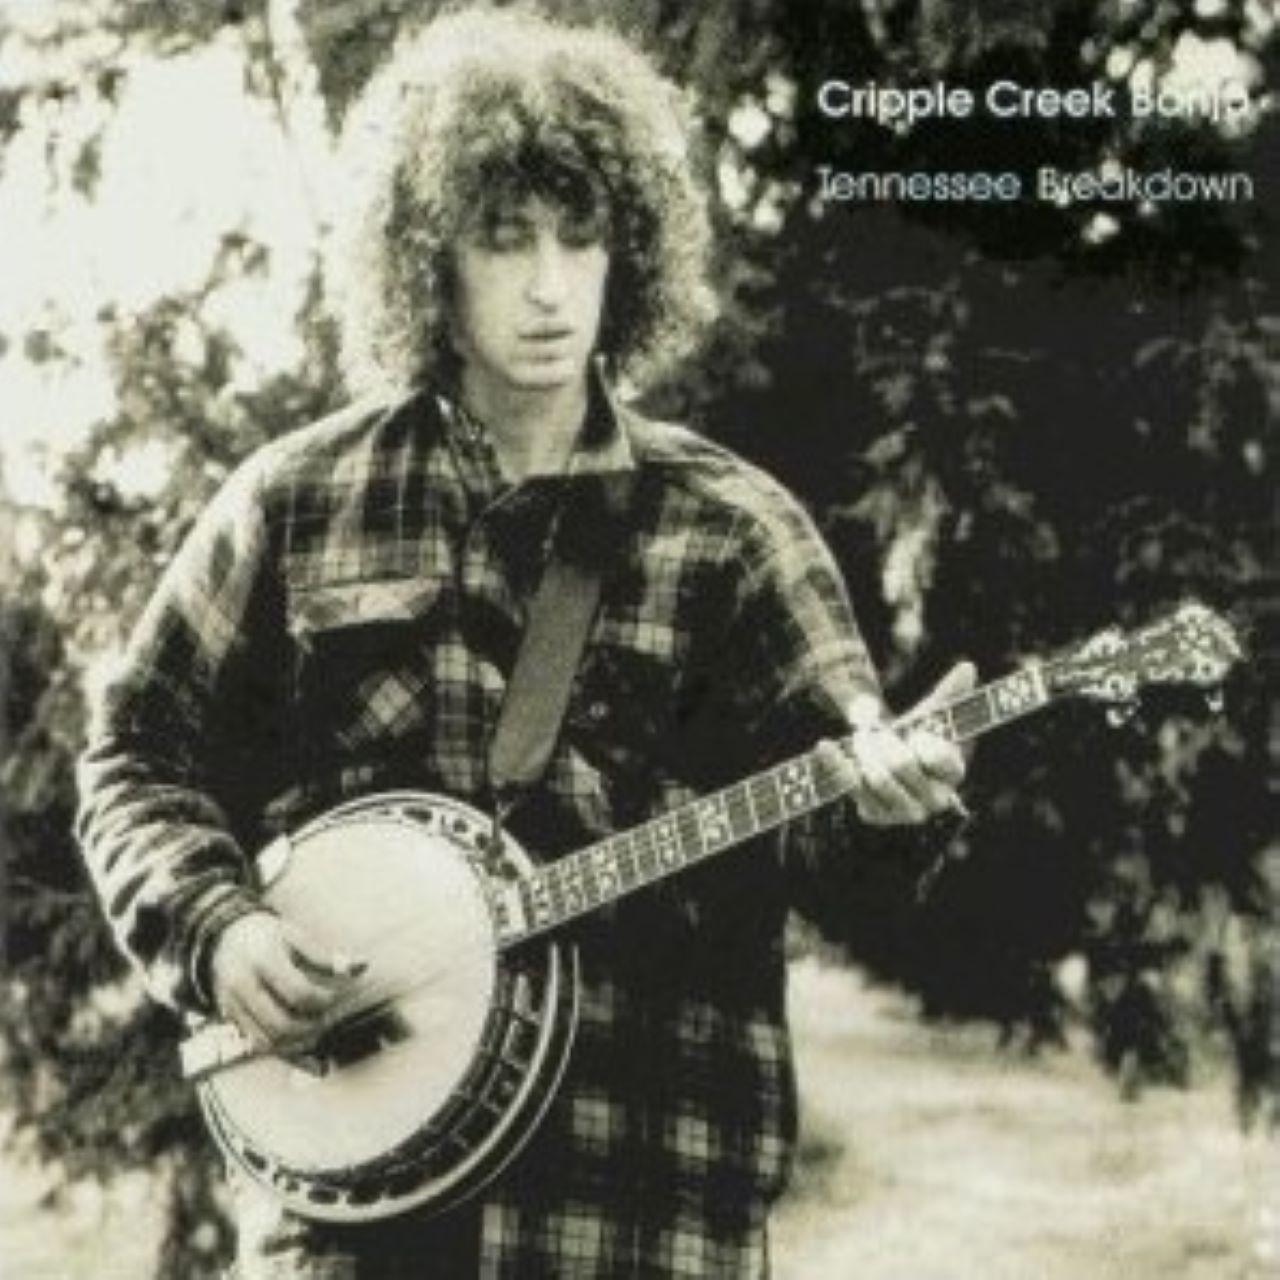 Cripple Creek Banjo - Tennessee Breakdown cover album